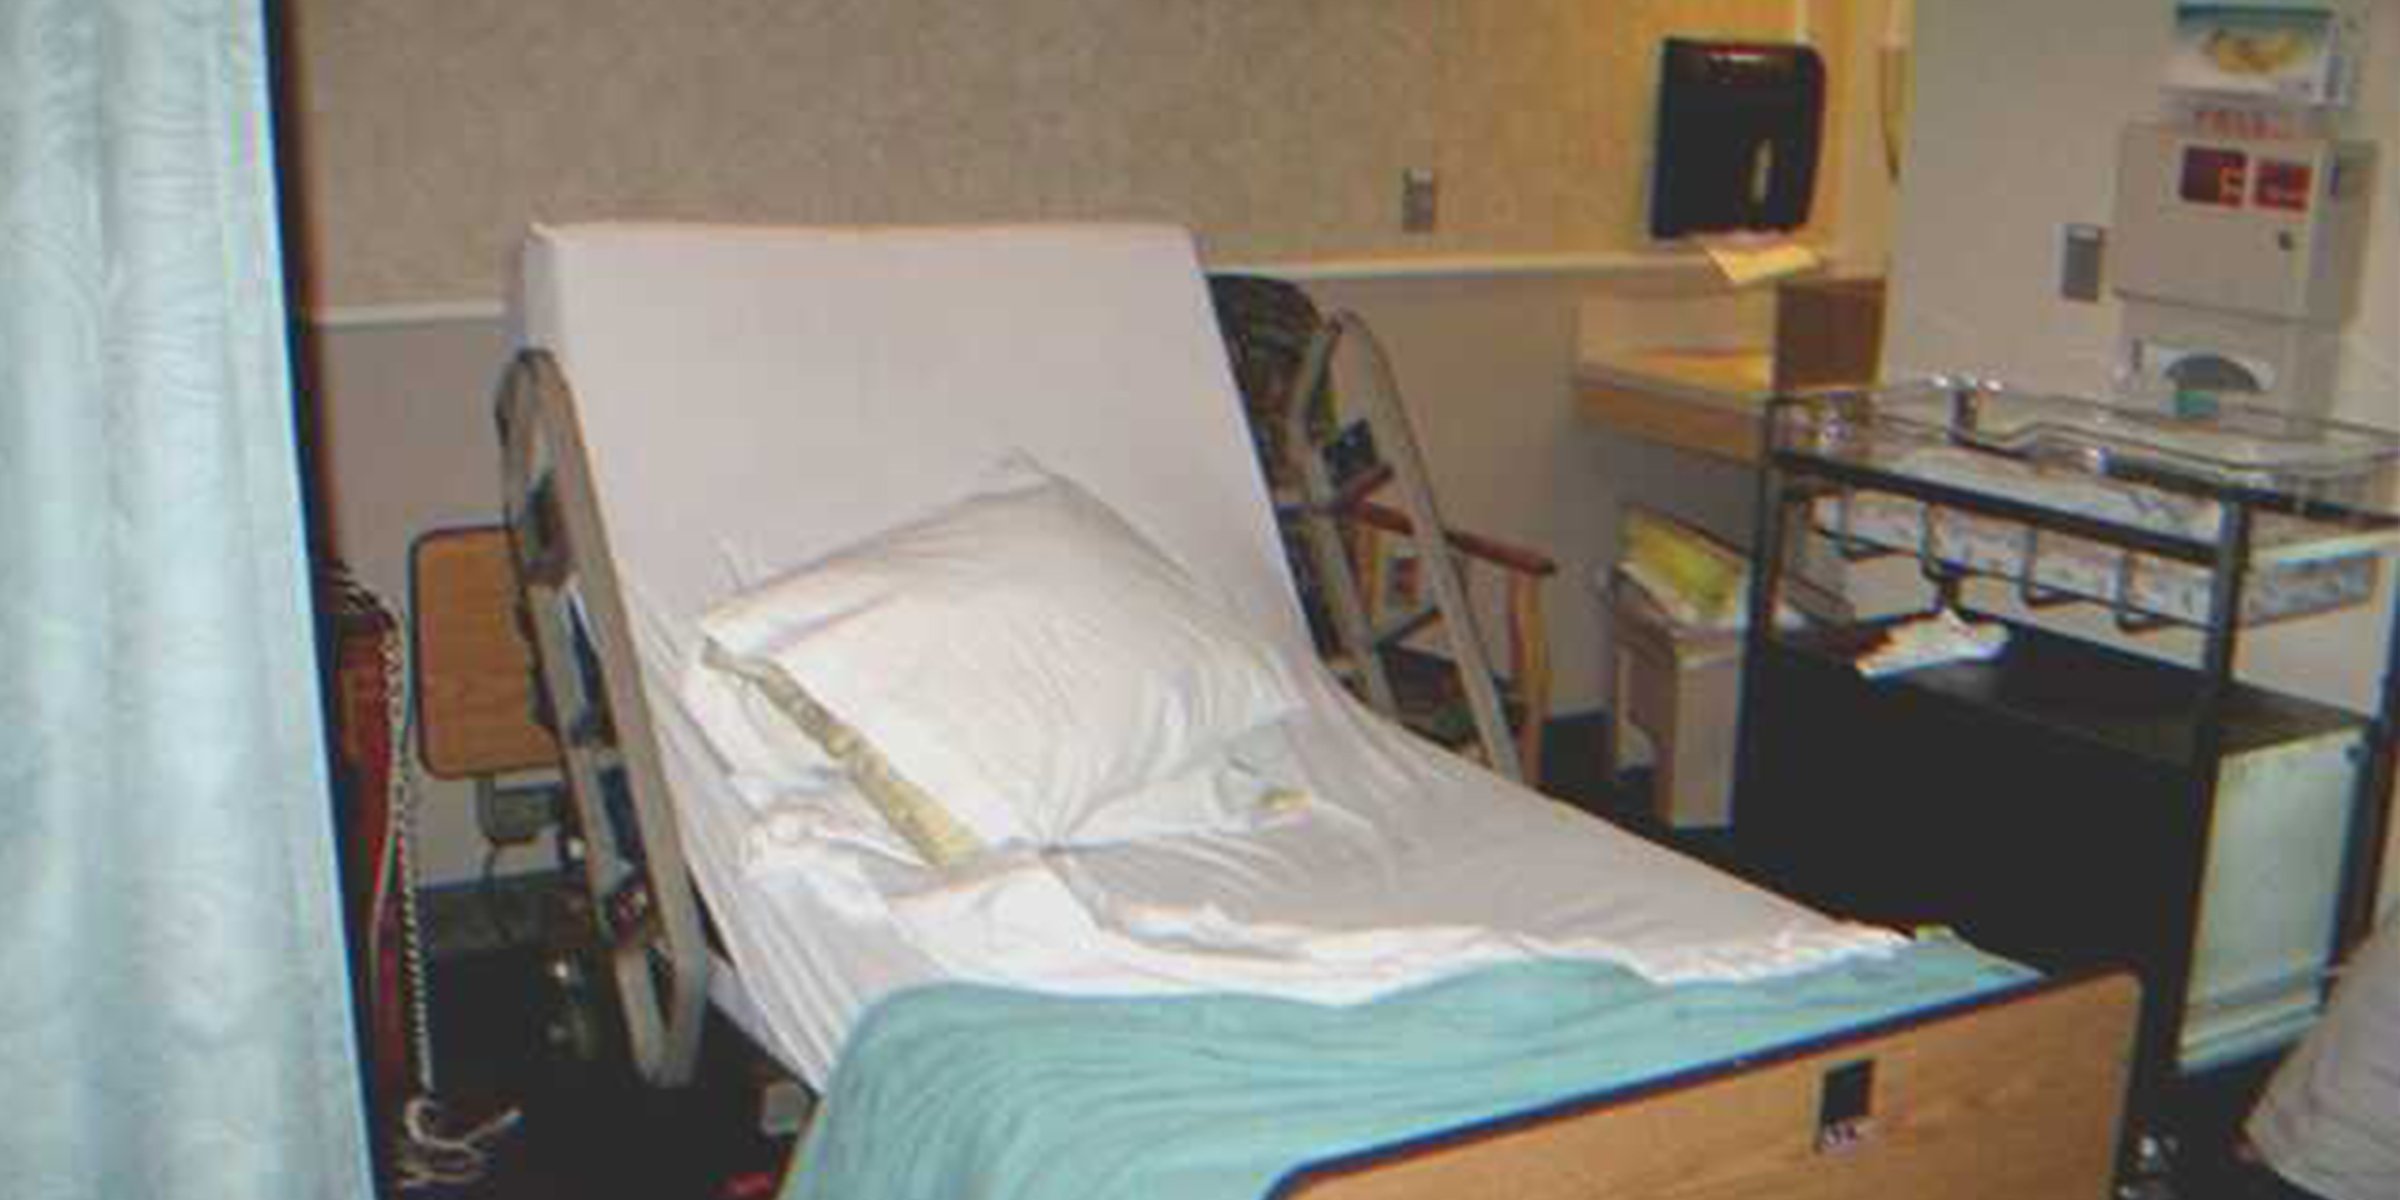 Una cama de hospital | Foto: Flickr.com/Shannon